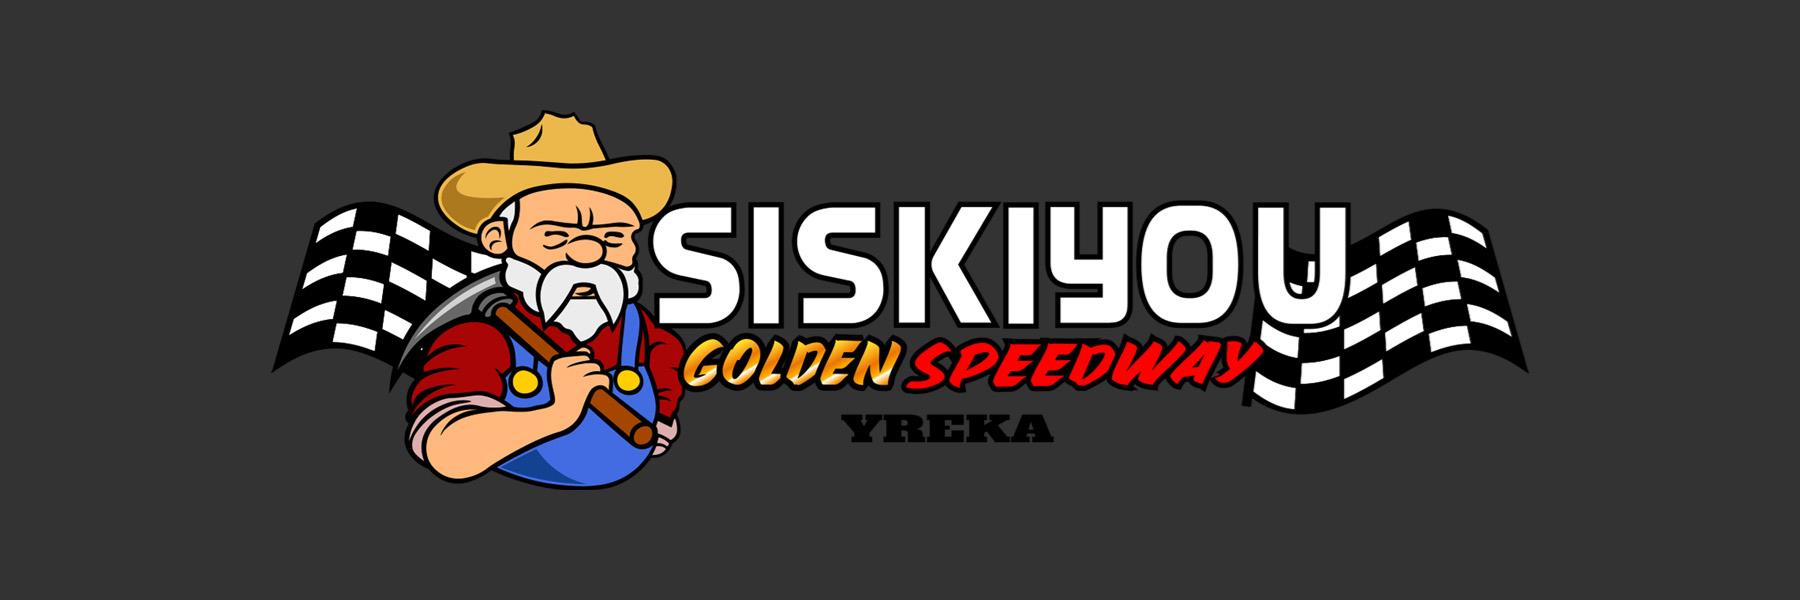 7/16/2022 - Siskiyou Golden Speedway